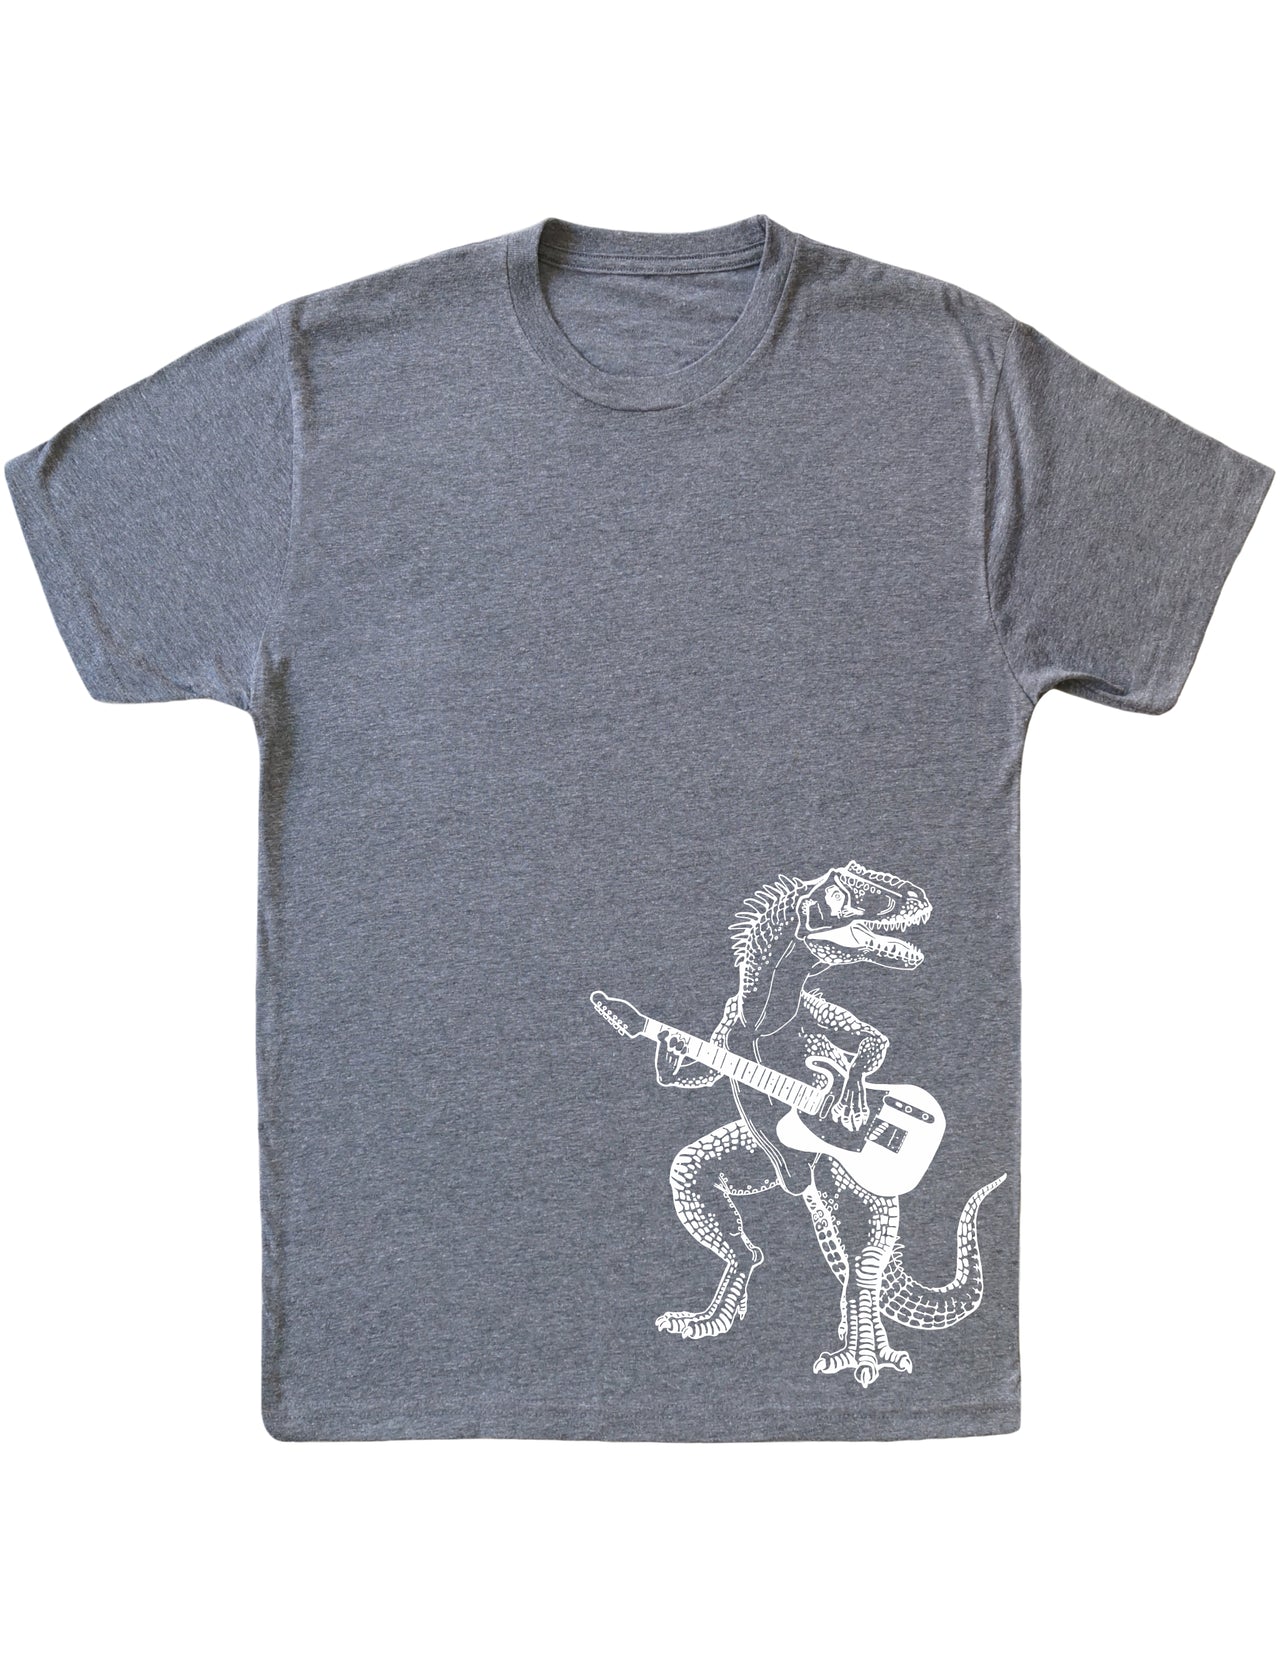 seembo-dinosaur-playing-guitar-guitarist-design-vintage-grey-t-shirt-side-print